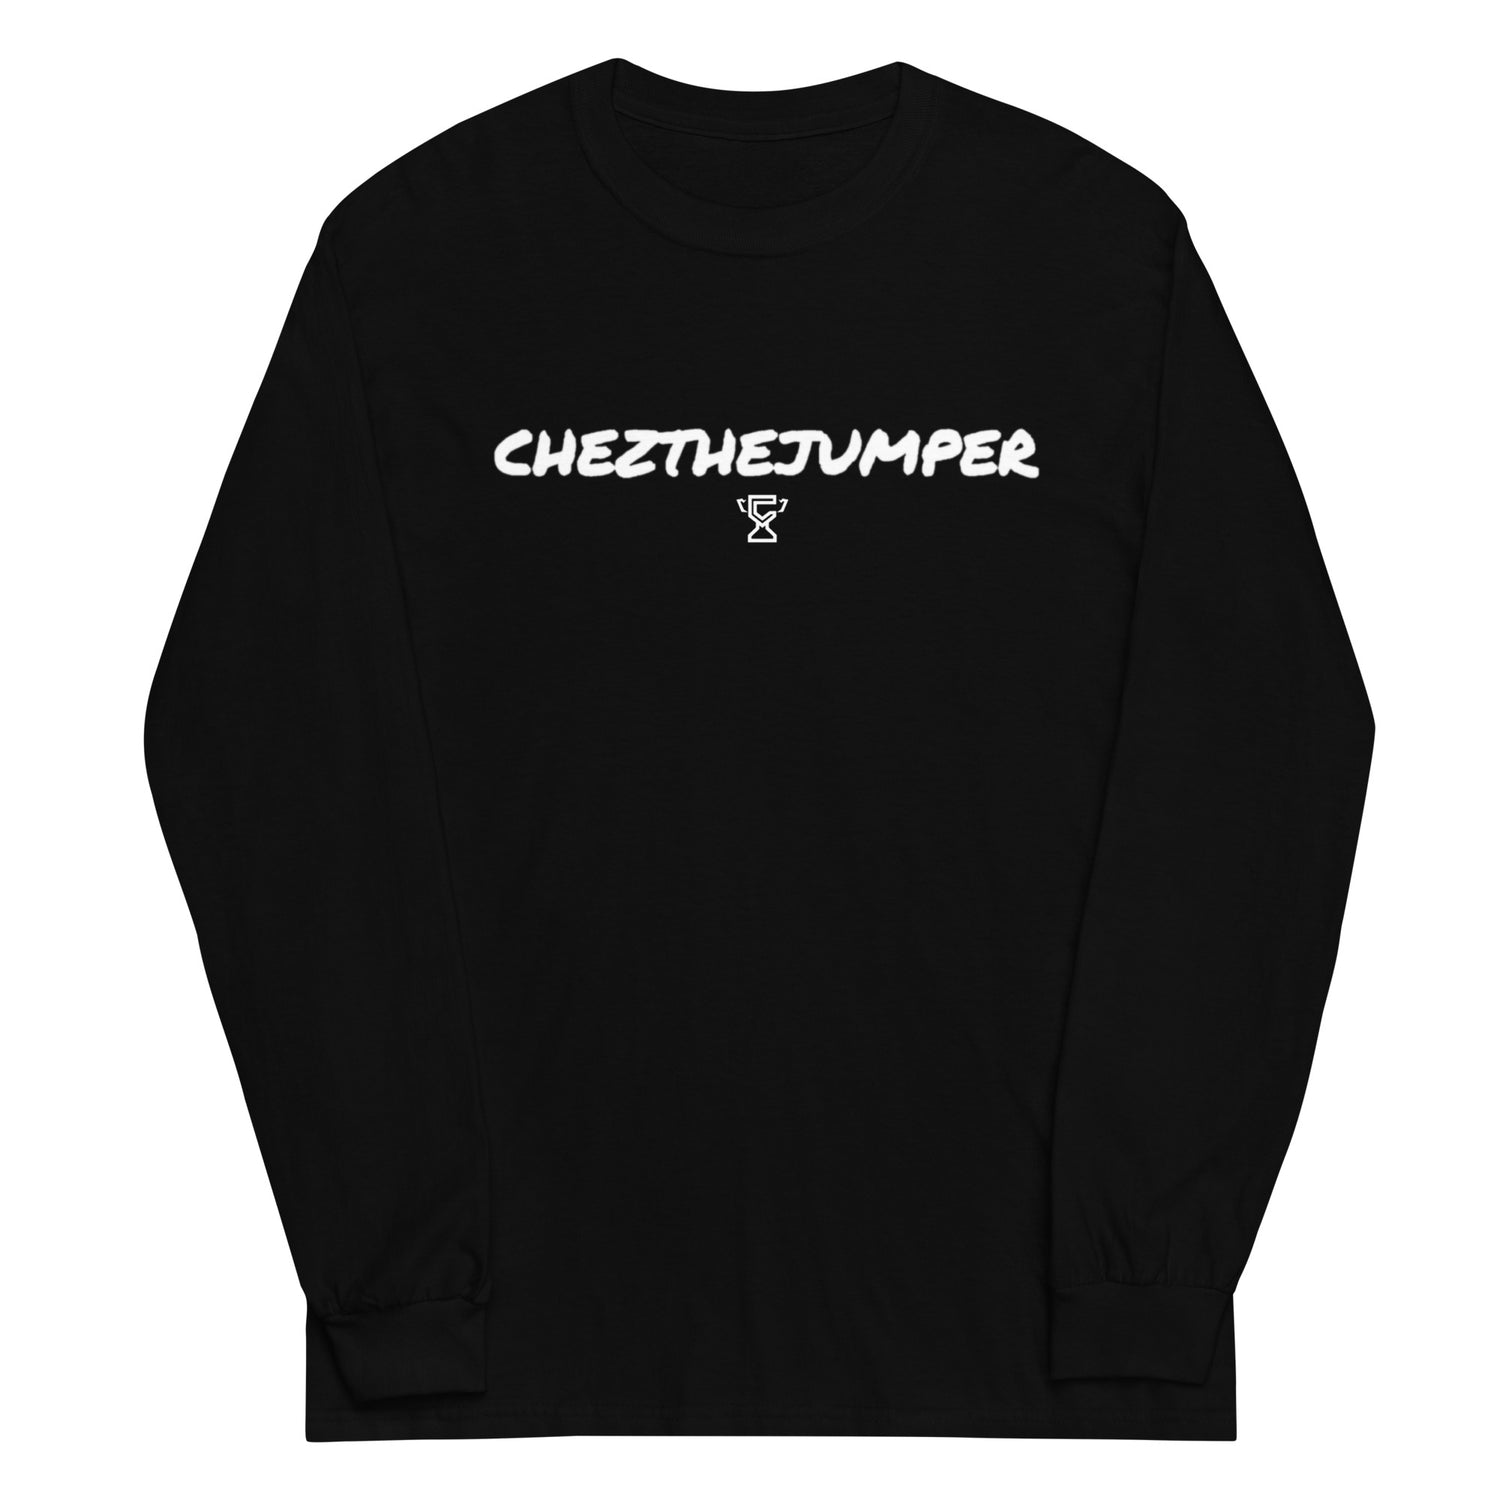 CHEZTHEJUMPER long sleeve shirt in black.